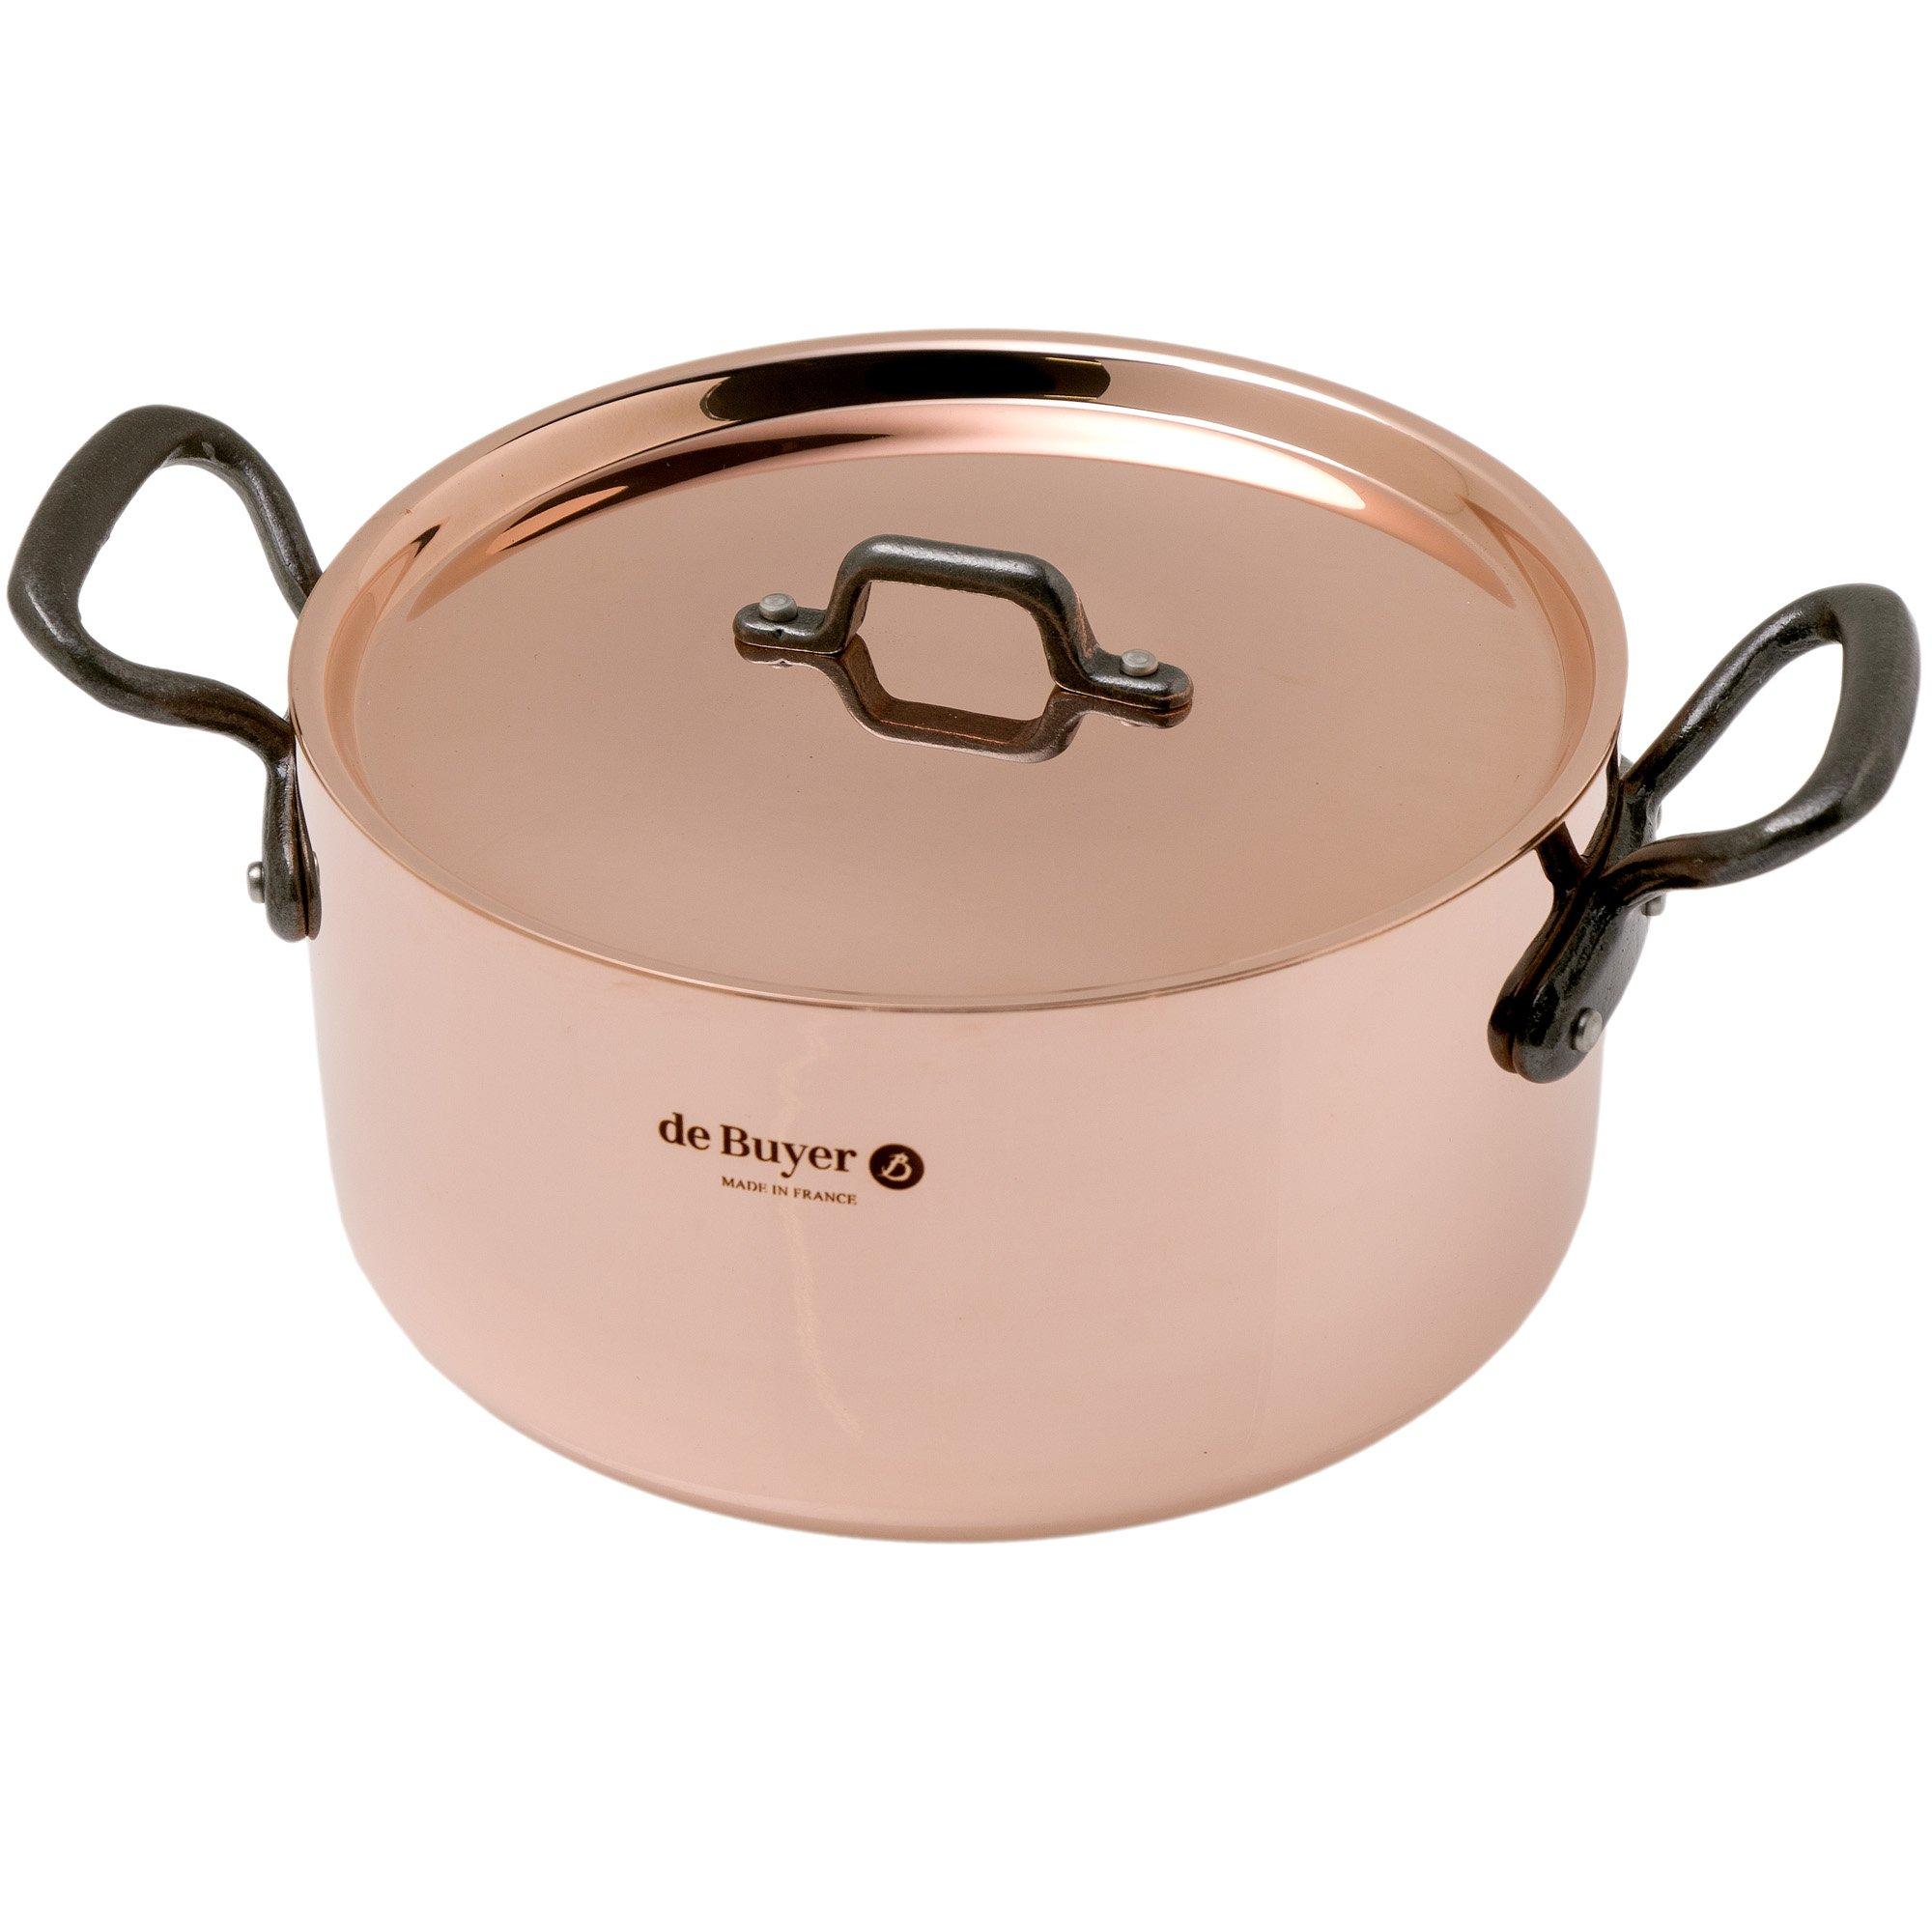 de Buyer Prima Matera Tradition 6342.20 copper cooking pot 20 cm